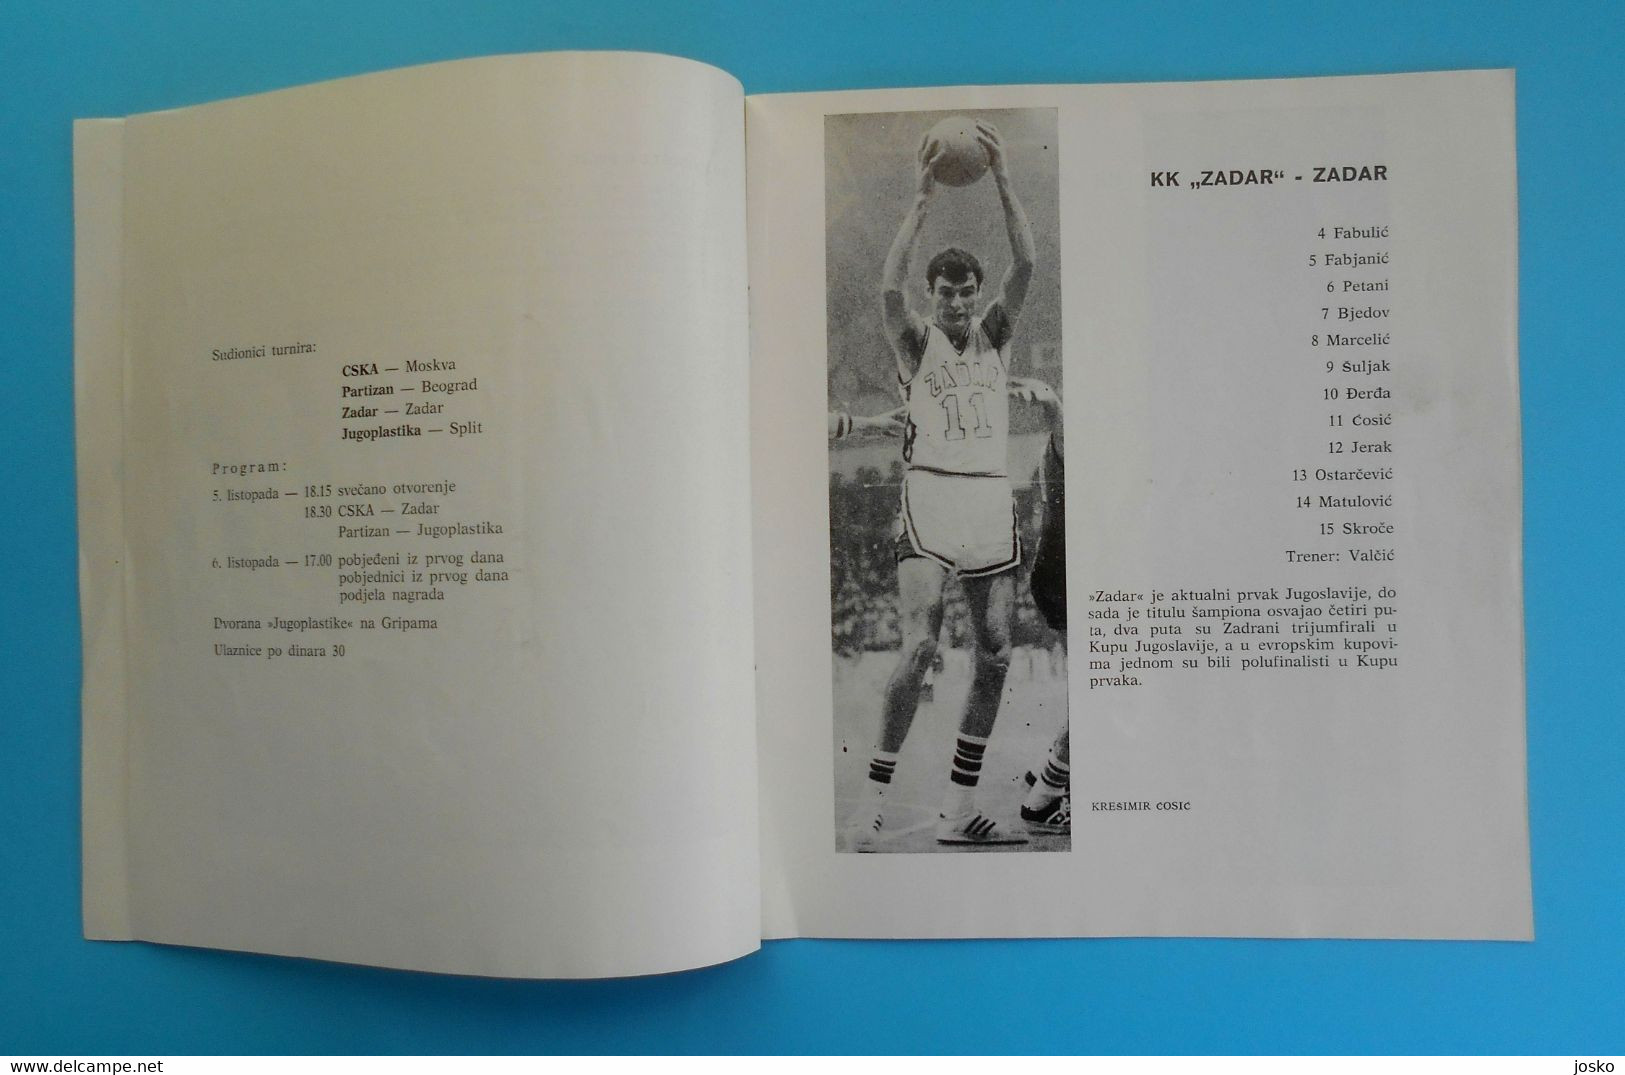 INTERNATIONAL BASKETBALL TOURNAMENT 1974 SPLITofficial programme CSKA Moscow * basket-ball pallacanestro baloncesto RRR